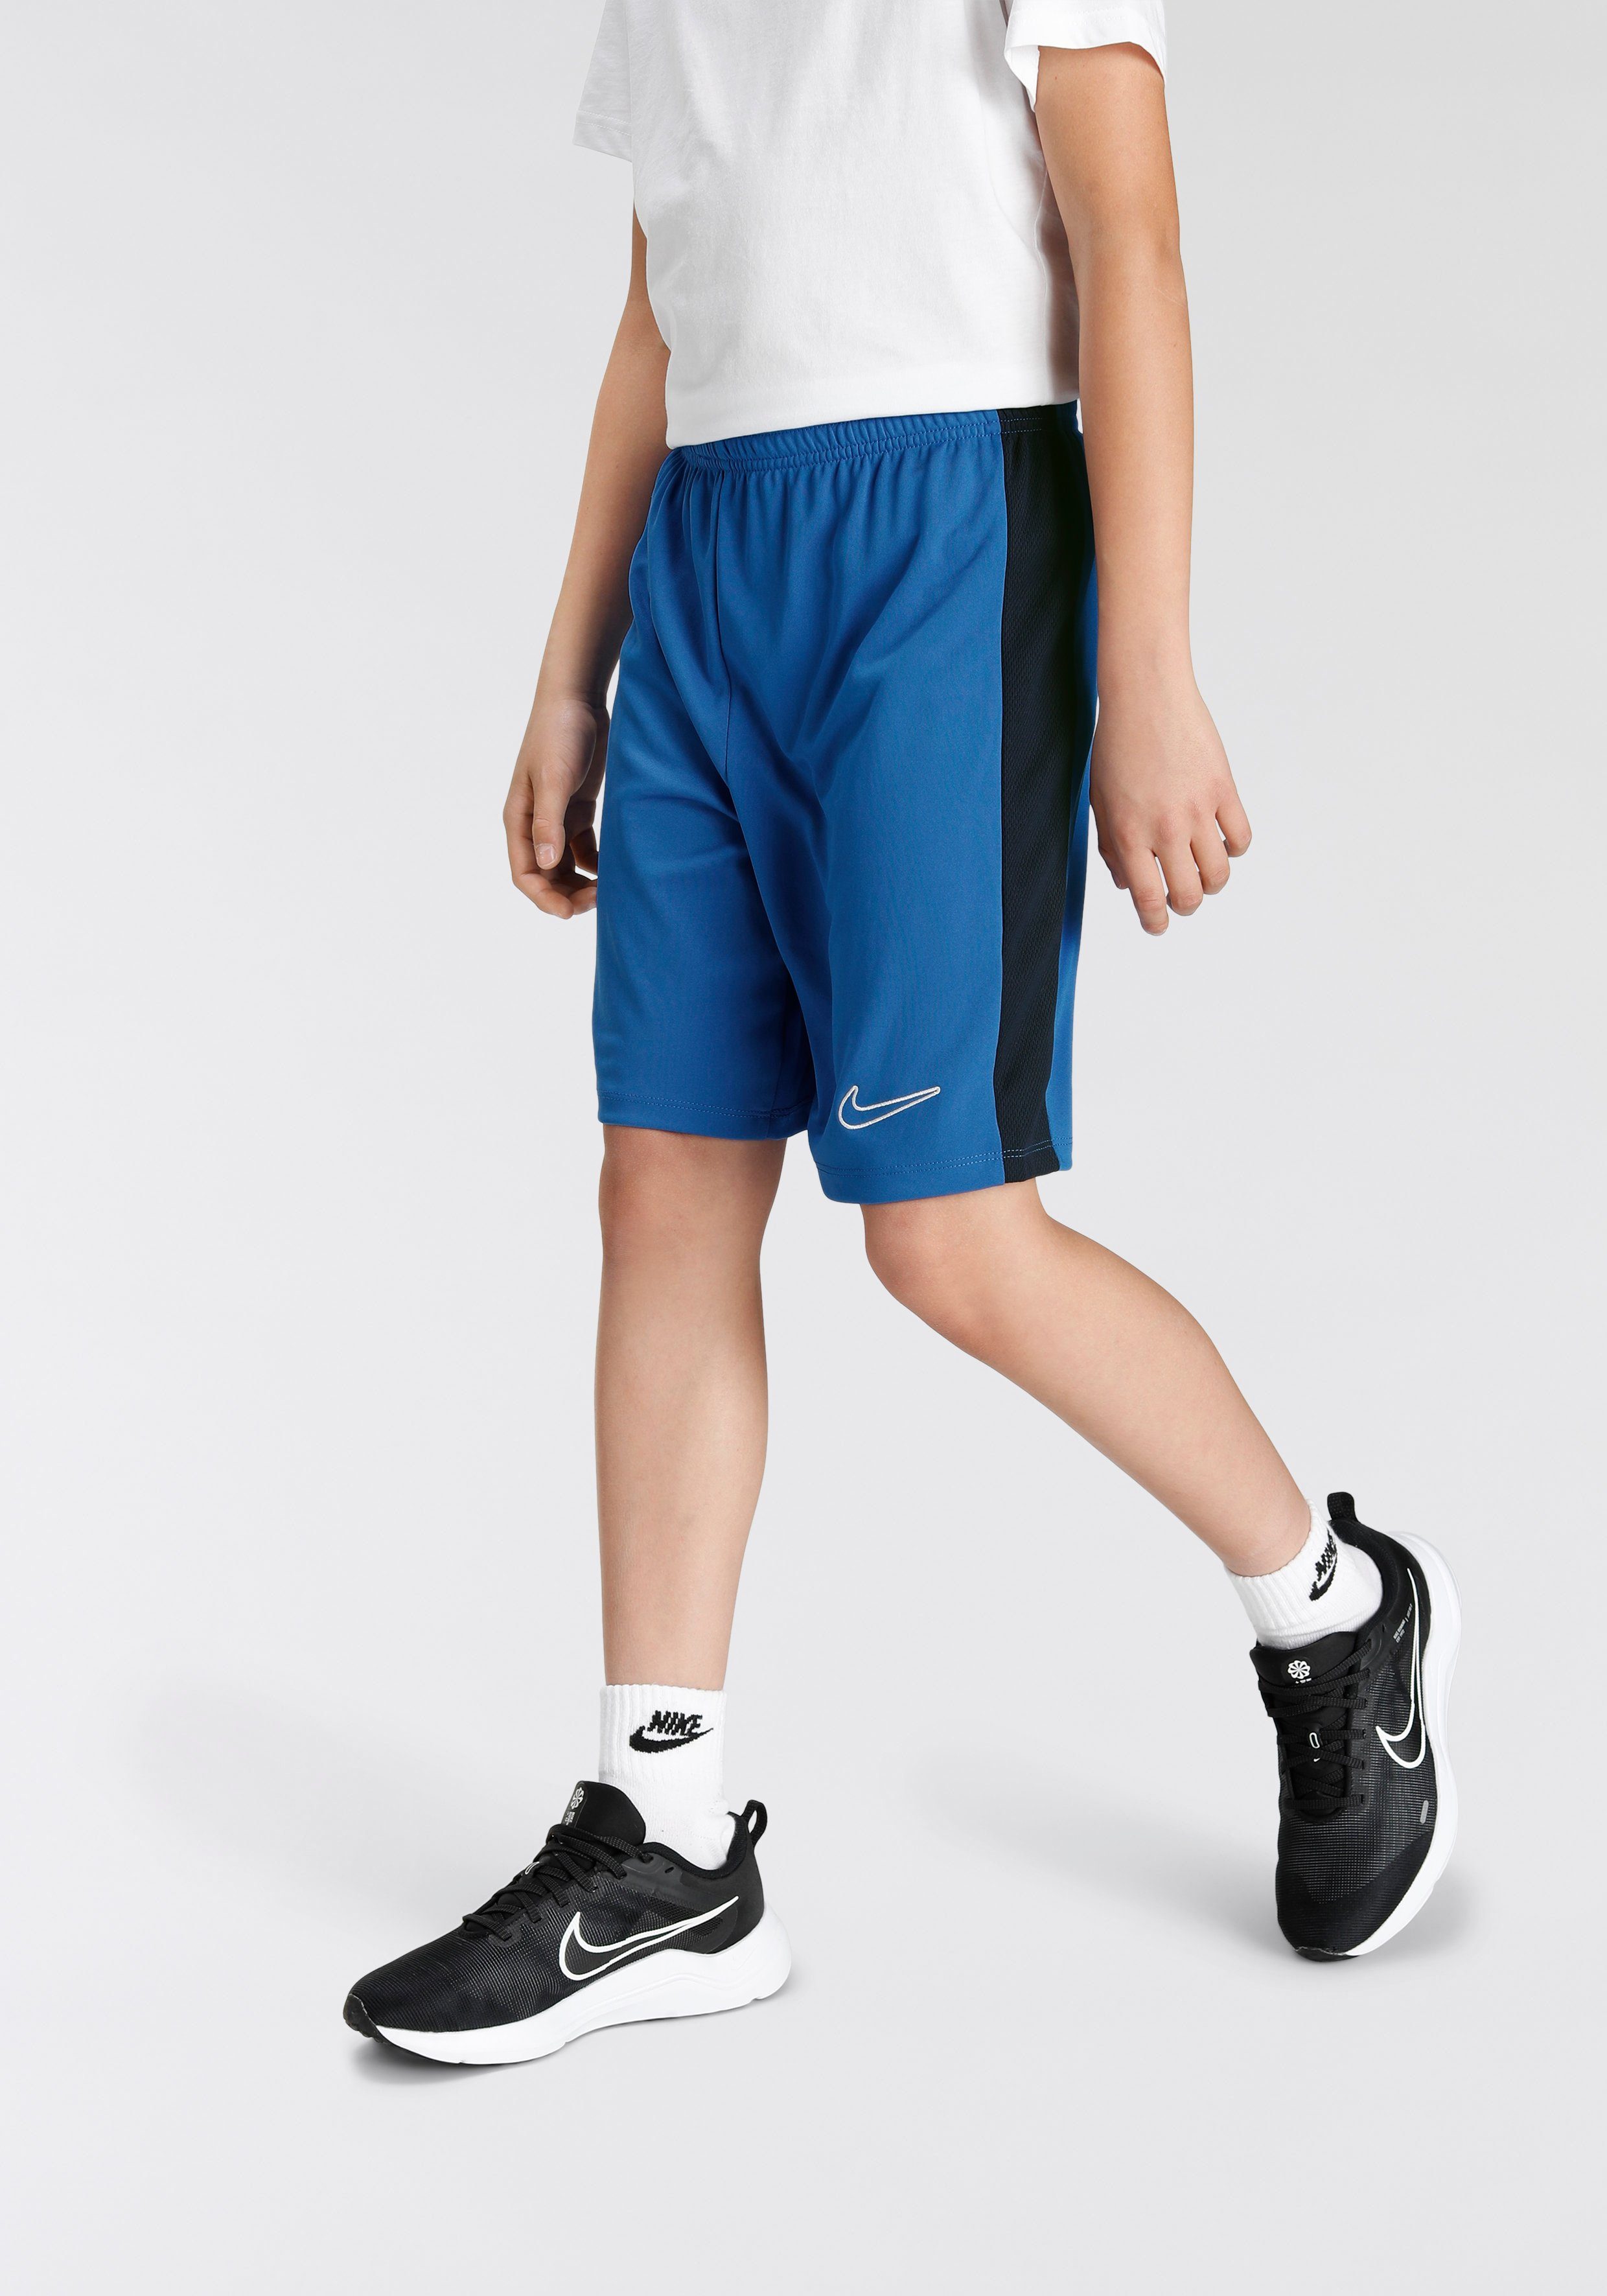 SHORTS KIDS' ACADEMY DRI-FIT Trainingsshorts ROYAL Nike BLUE/OBSIDIAN/WHITE